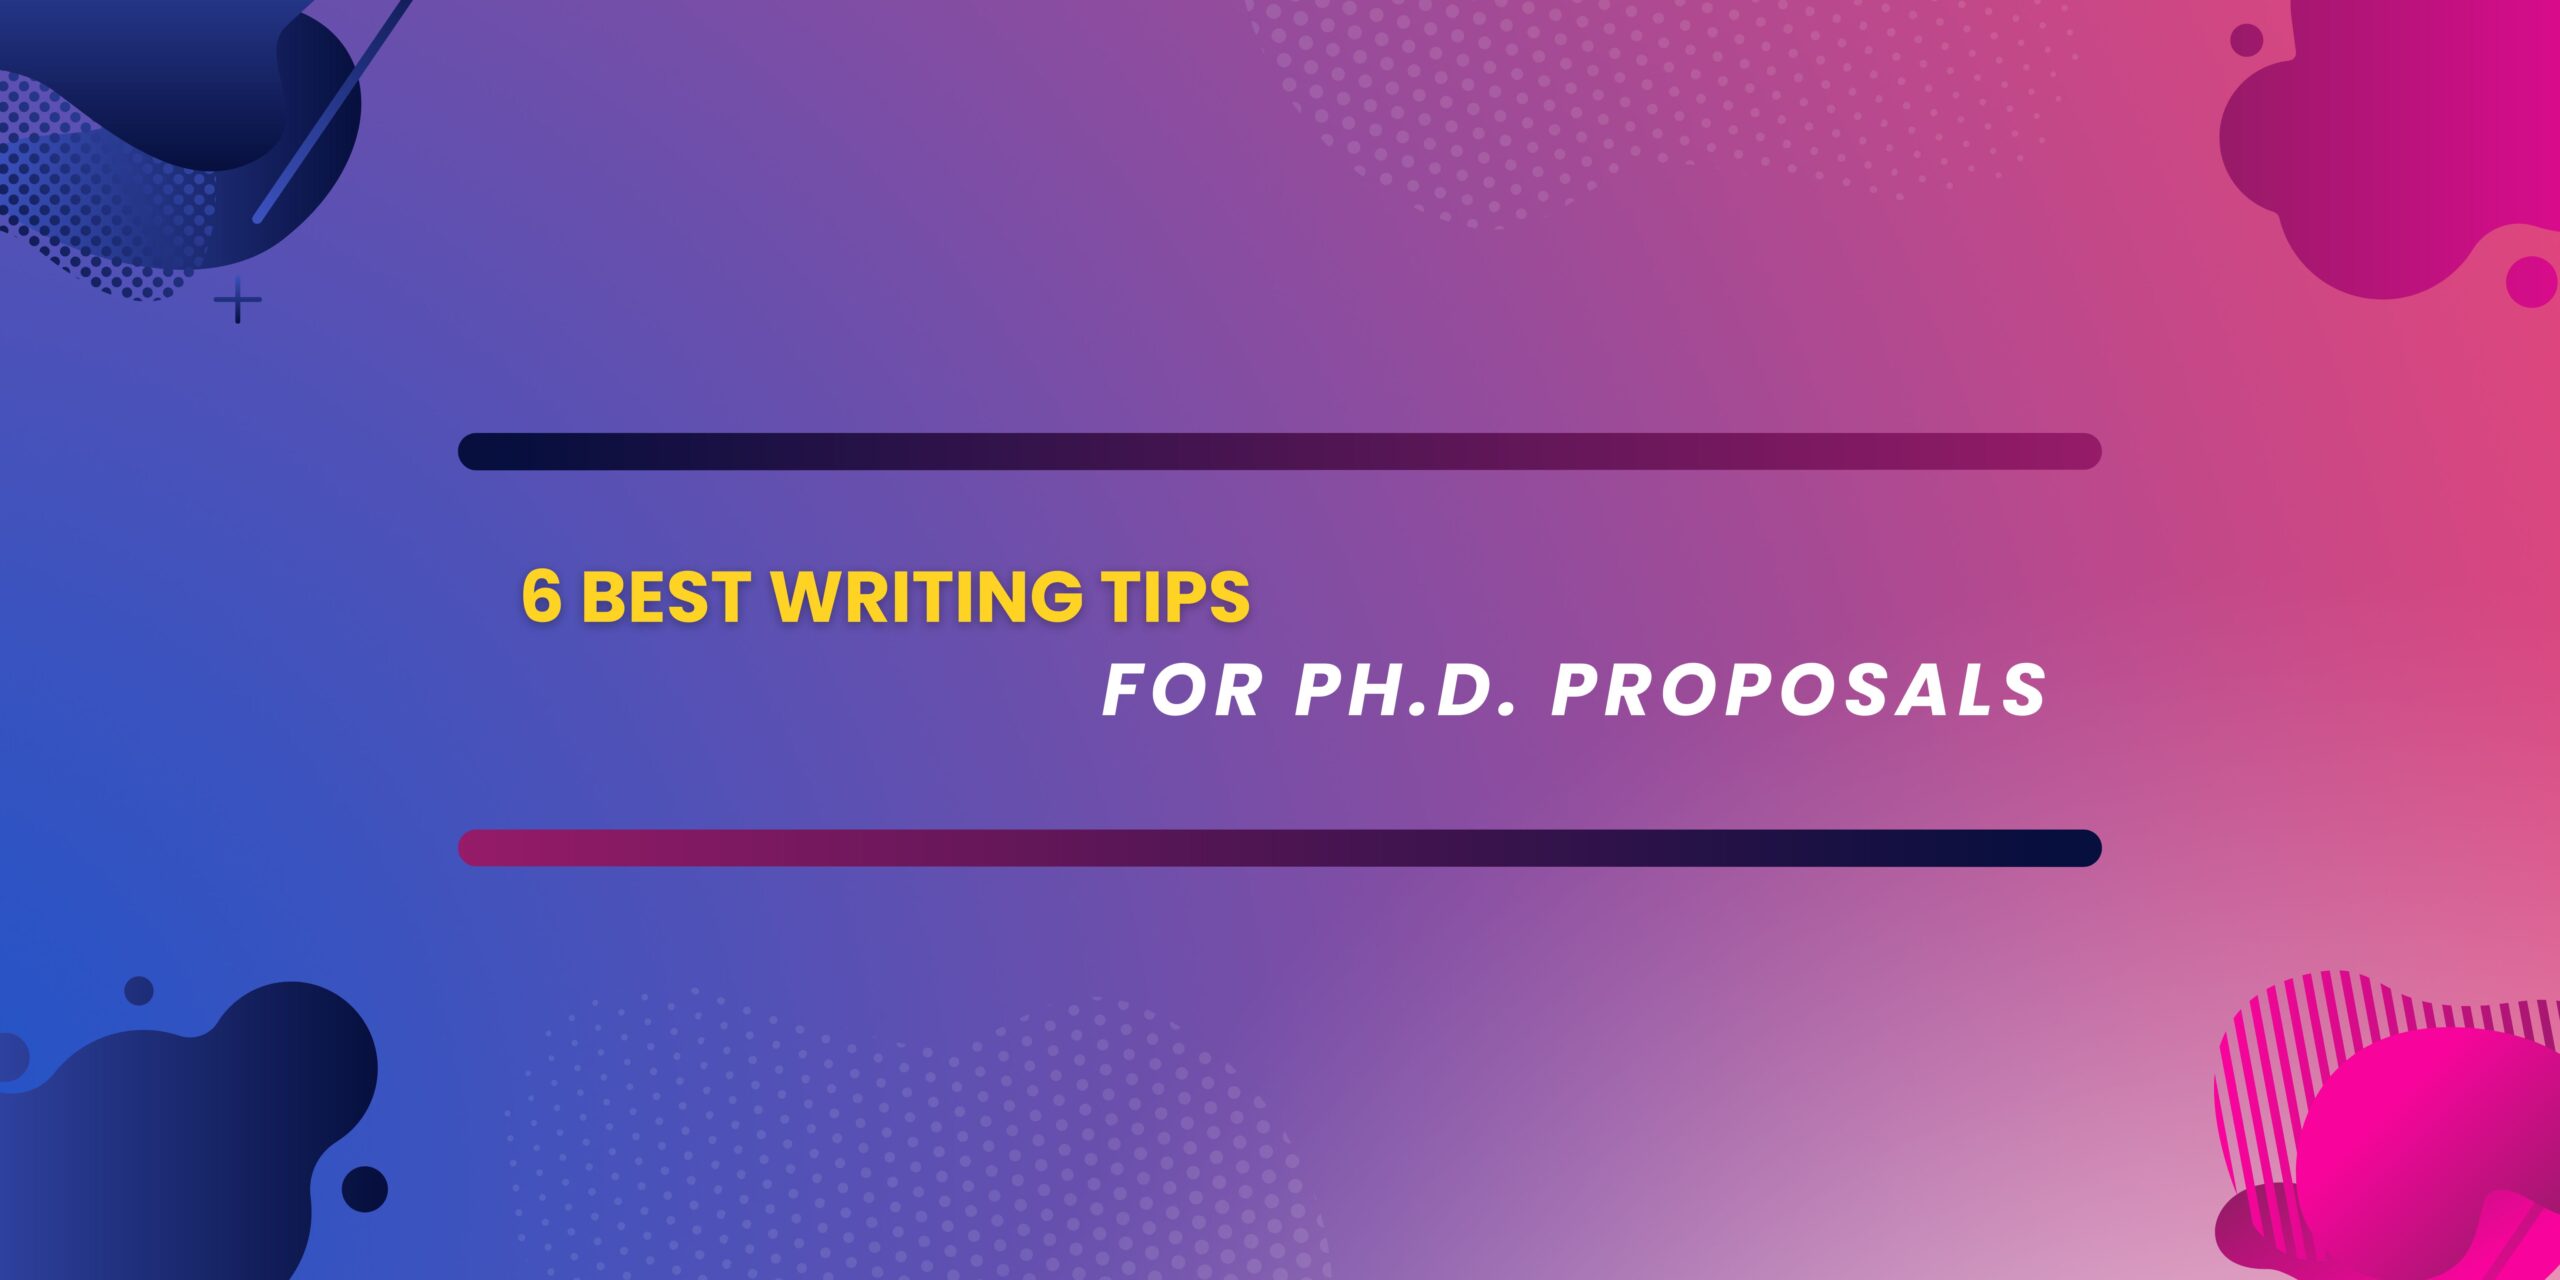 phd proposals writing tips